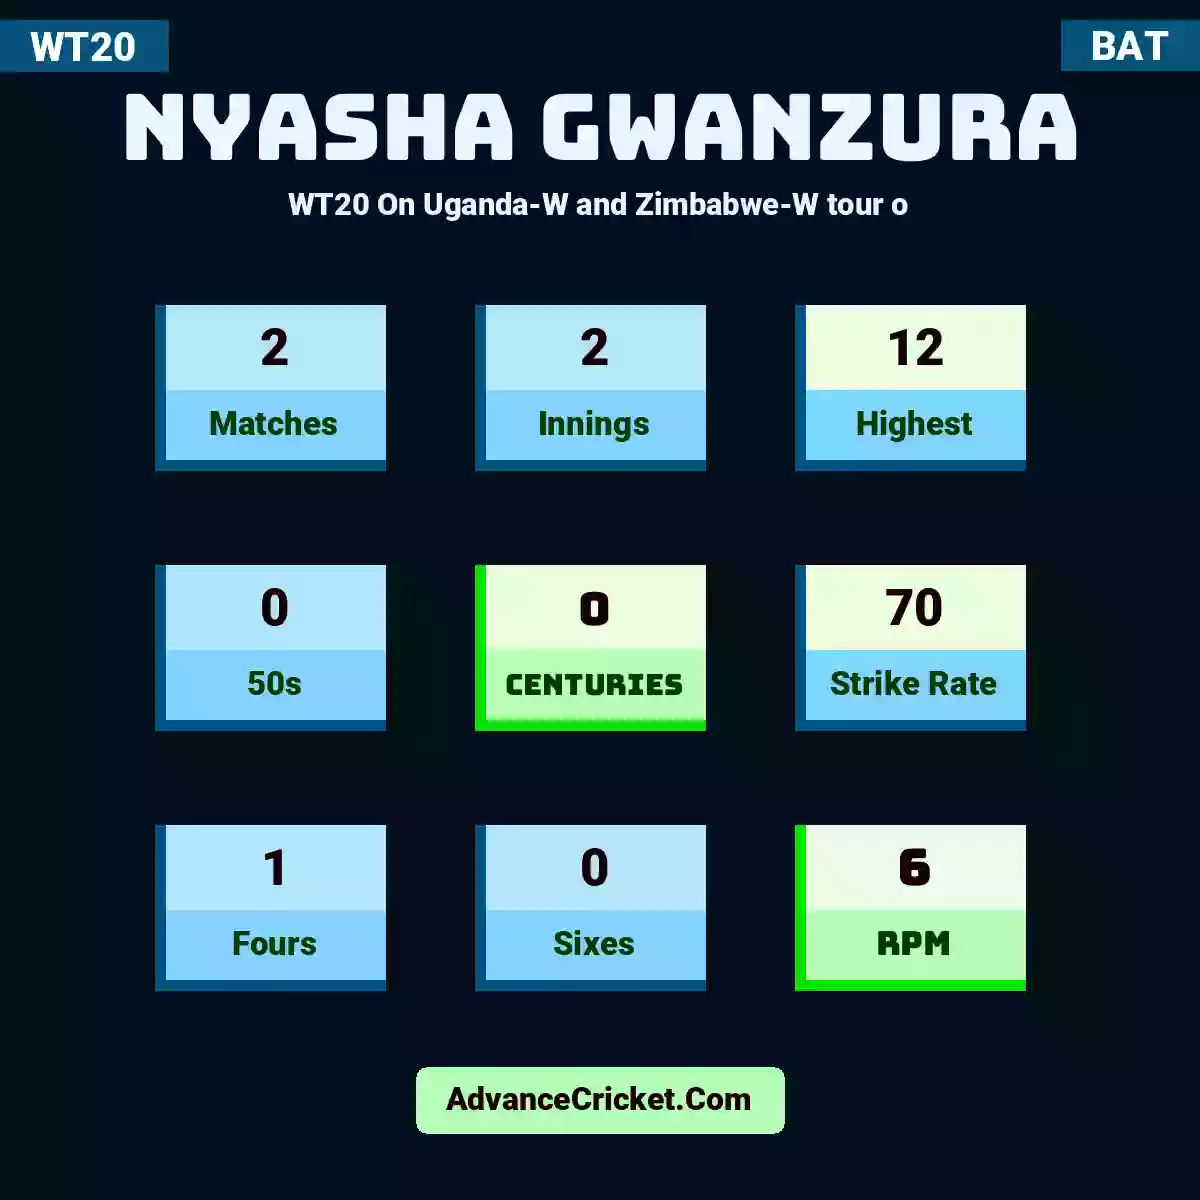 Nyasha Gwanzura WT20  On Uganda-W and Zimbabwe-W tour o, Nyasha Gwanzura played 2 matches, scored 12 runs as highest, 0 half-centuries, and 0 centuries, with a strike rate of 70. N.Gwanzura hit 1 fours and 0 sixes, with an RPM of 6.